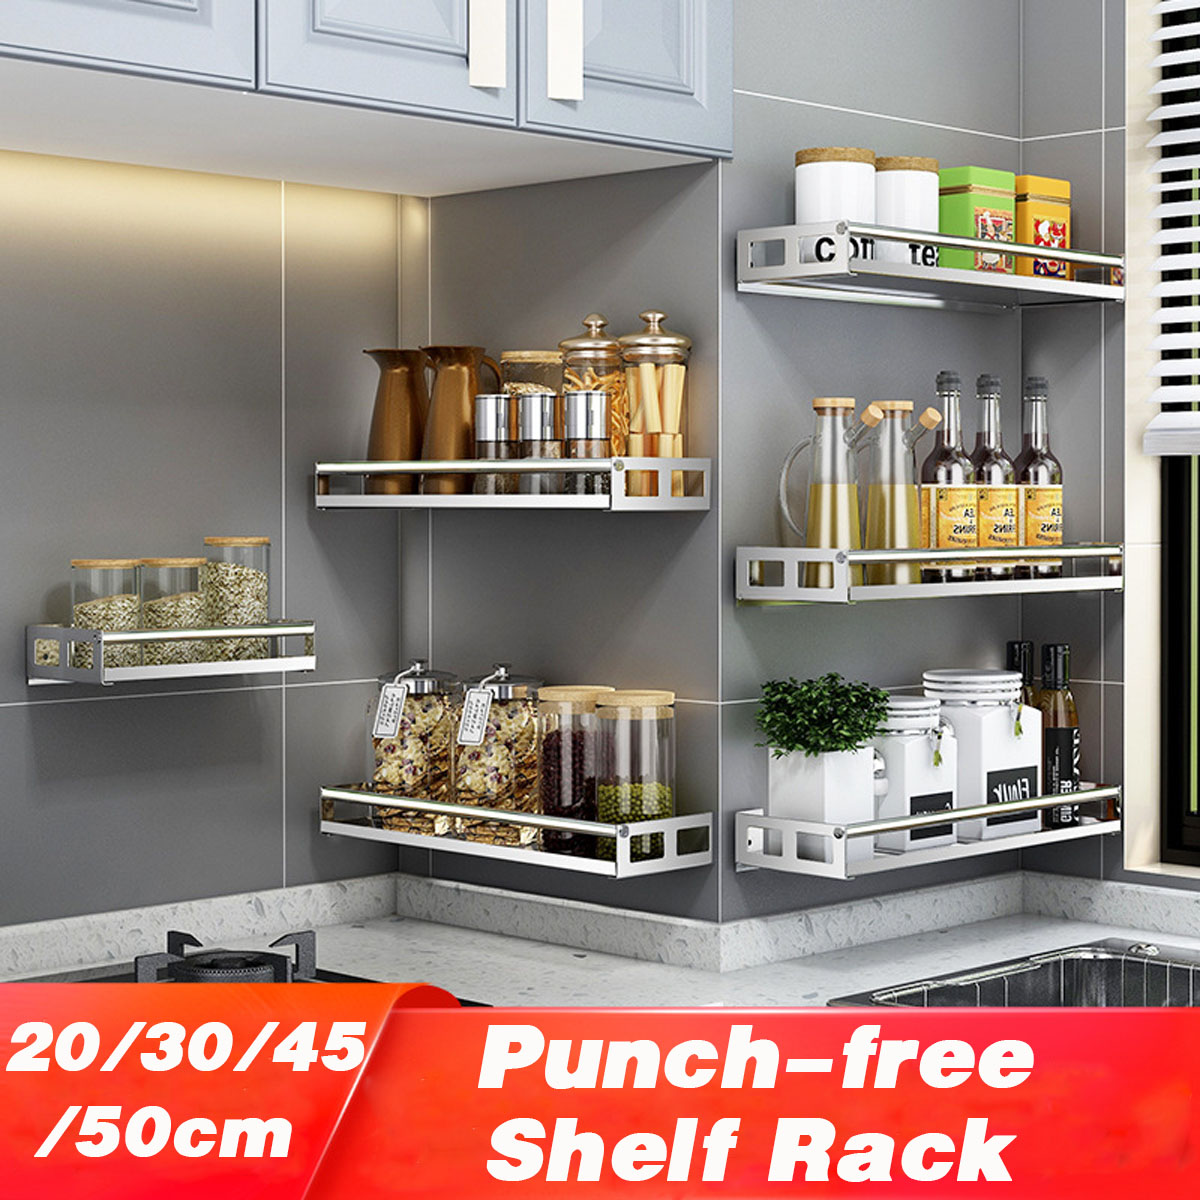 Singe-Layer-Stainless-Steel-Rack-Organizer-Storage-Wall-Mounted-Basket-for-Kitchen-Bathroom-Shower-S-1786418-1